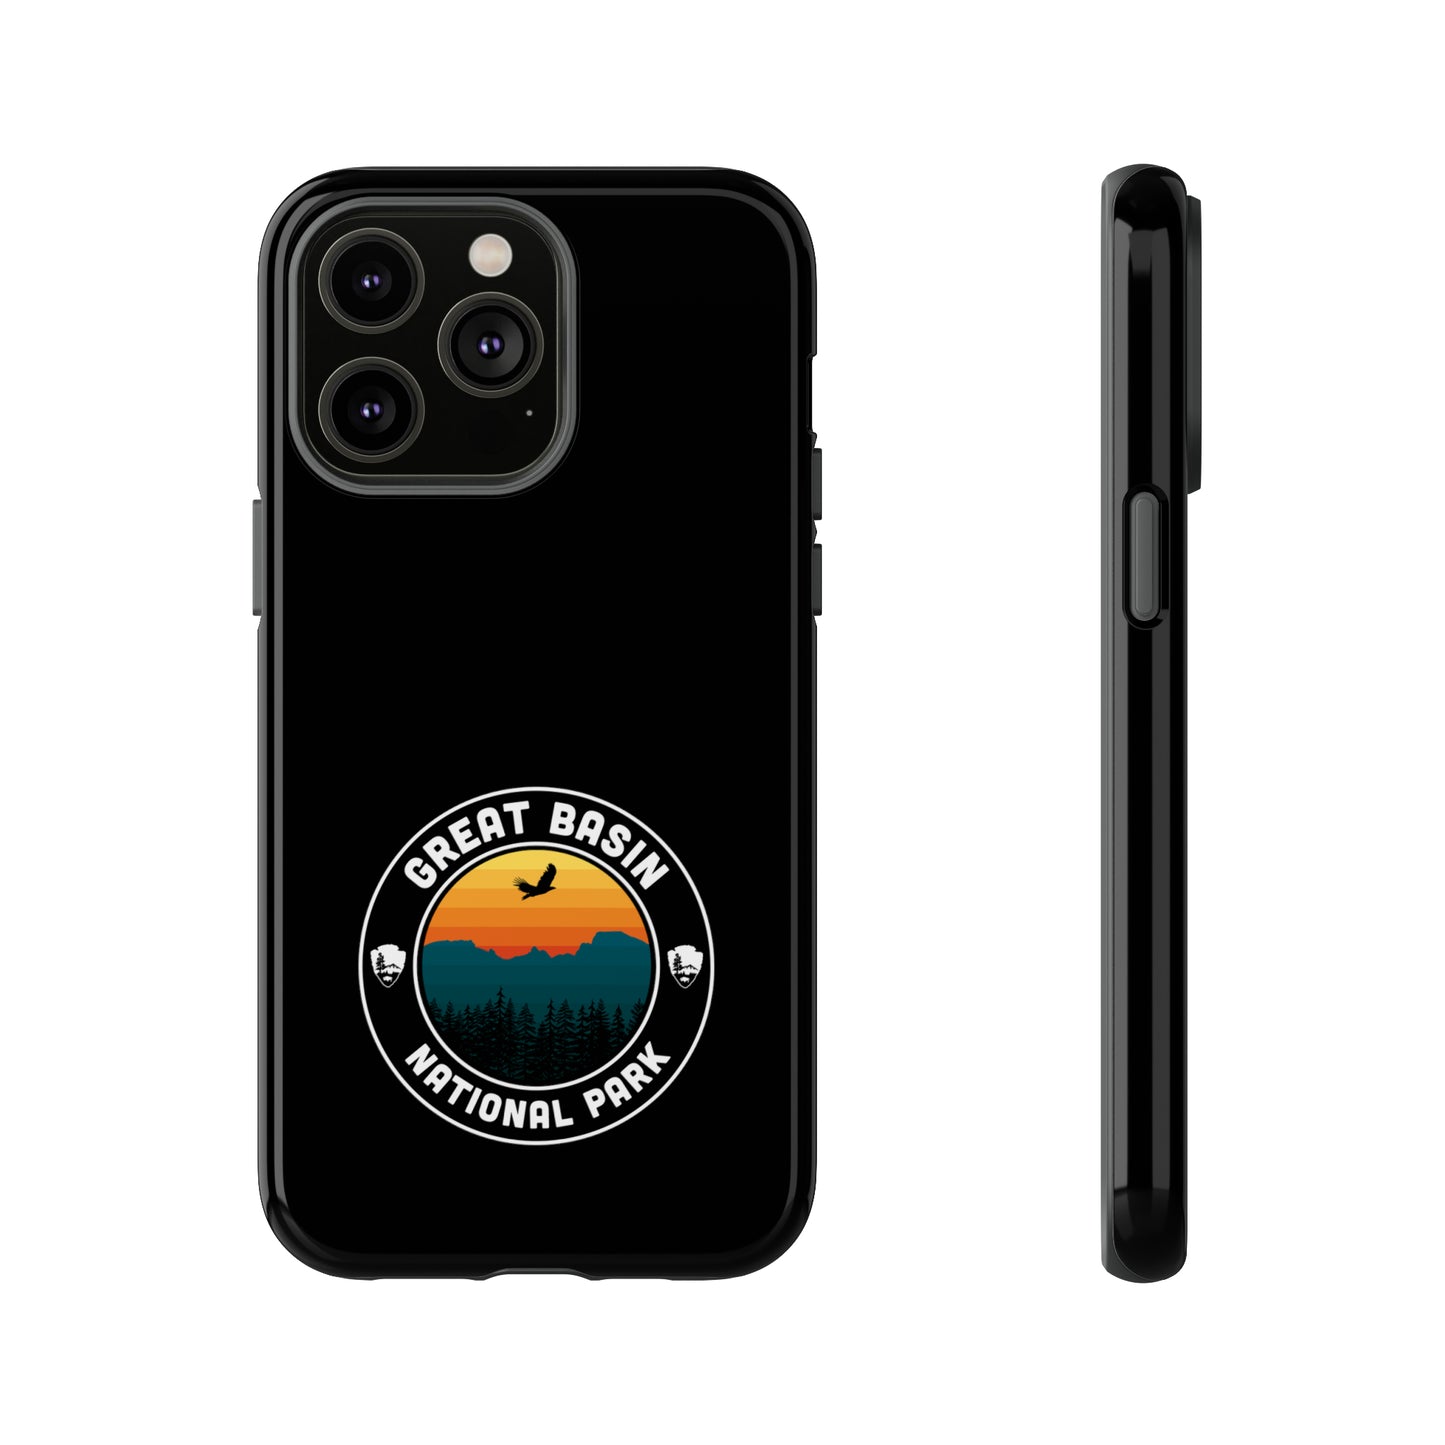 Great Basin National Park iPhone Case - Round Emblem Design